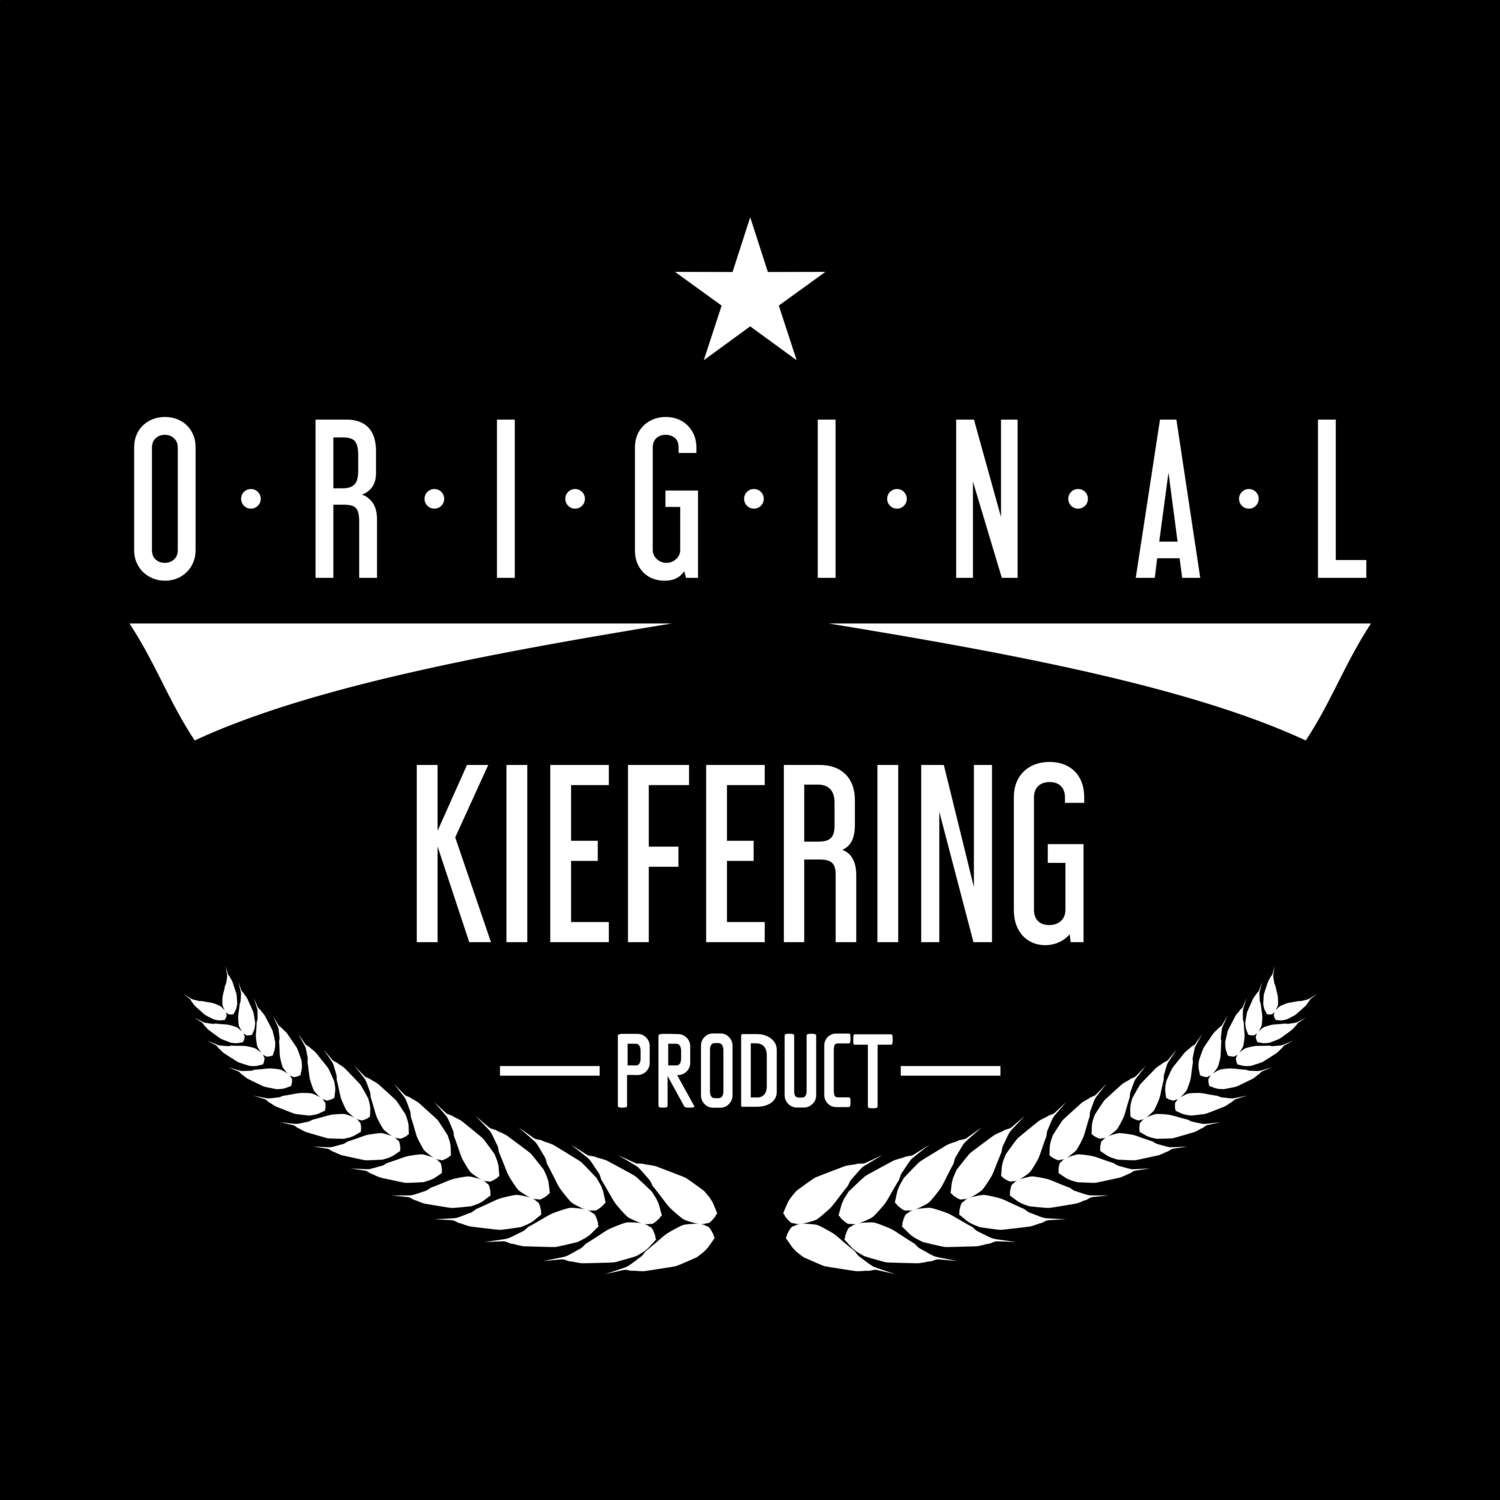 Kiefering T-Shirt »Original Product«